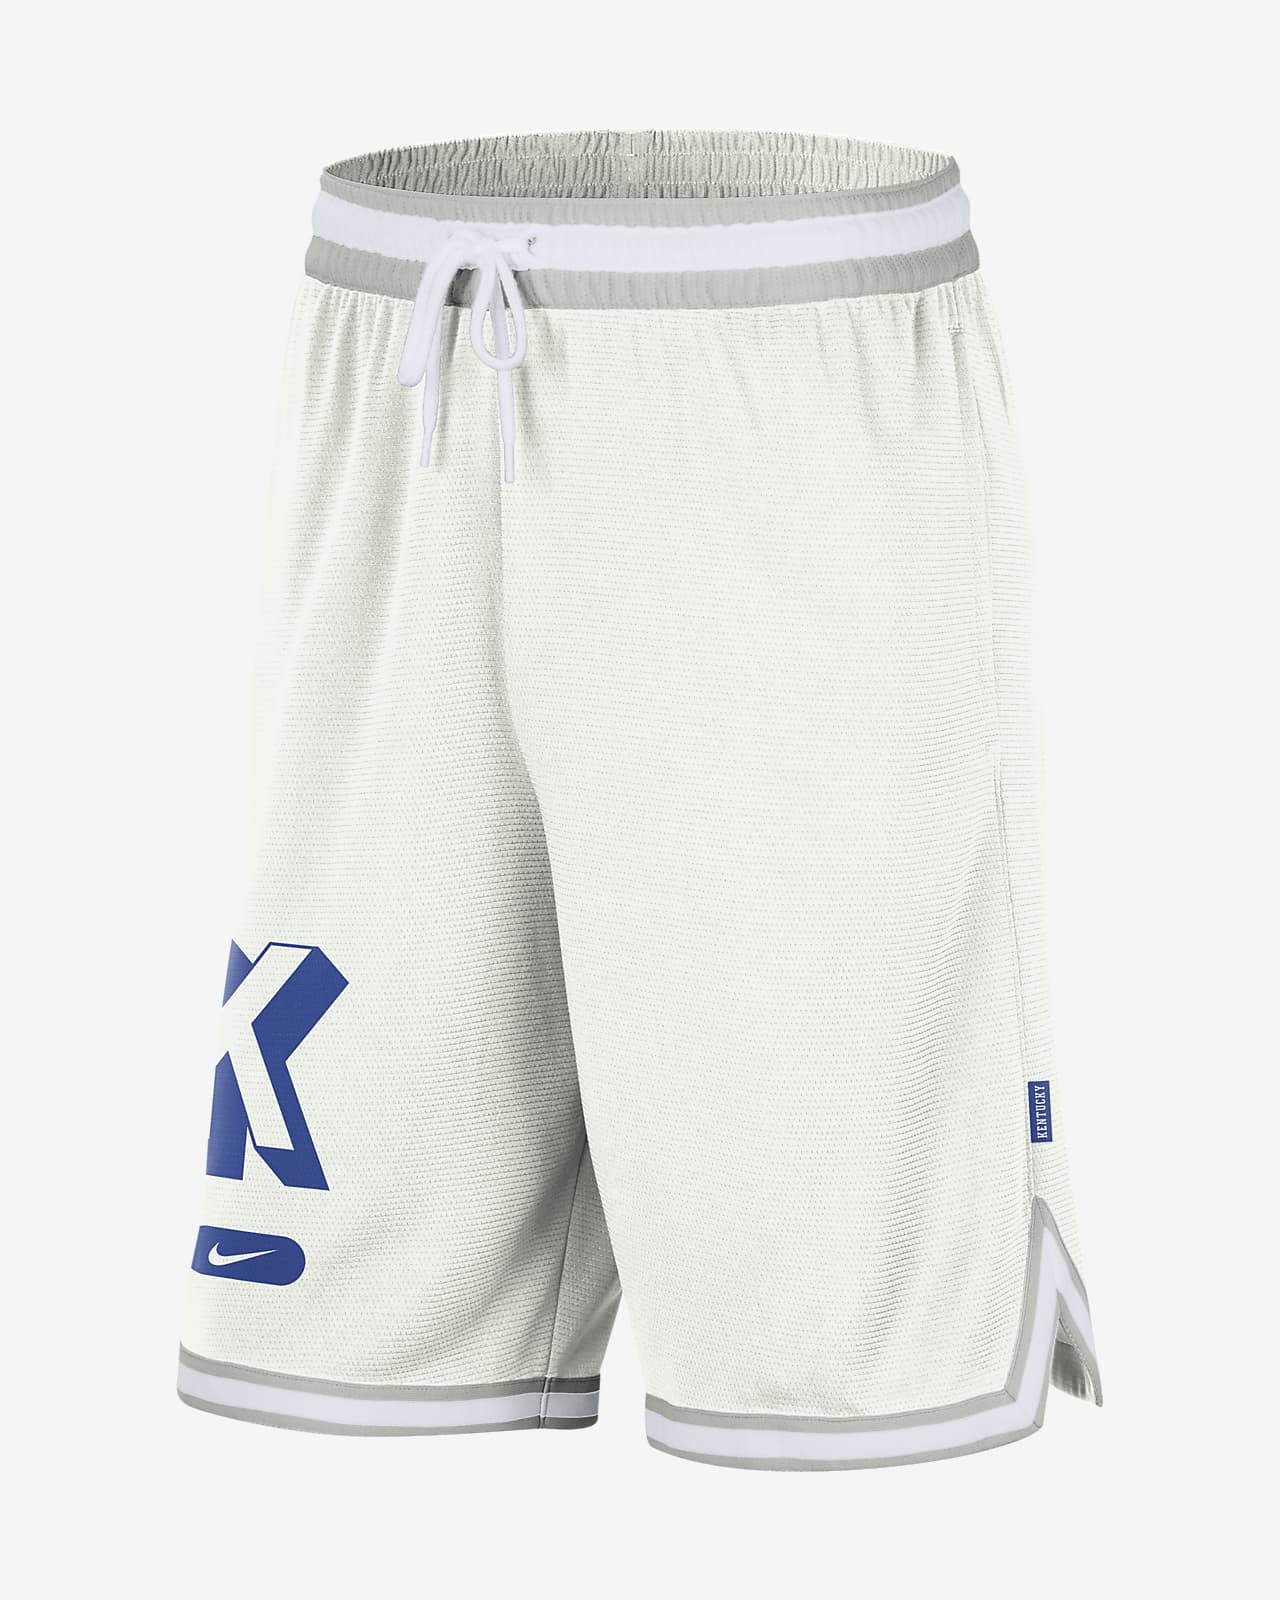 Shorts universitarios Nike Dri-FIT para hombre Kentucky DNA 3.0